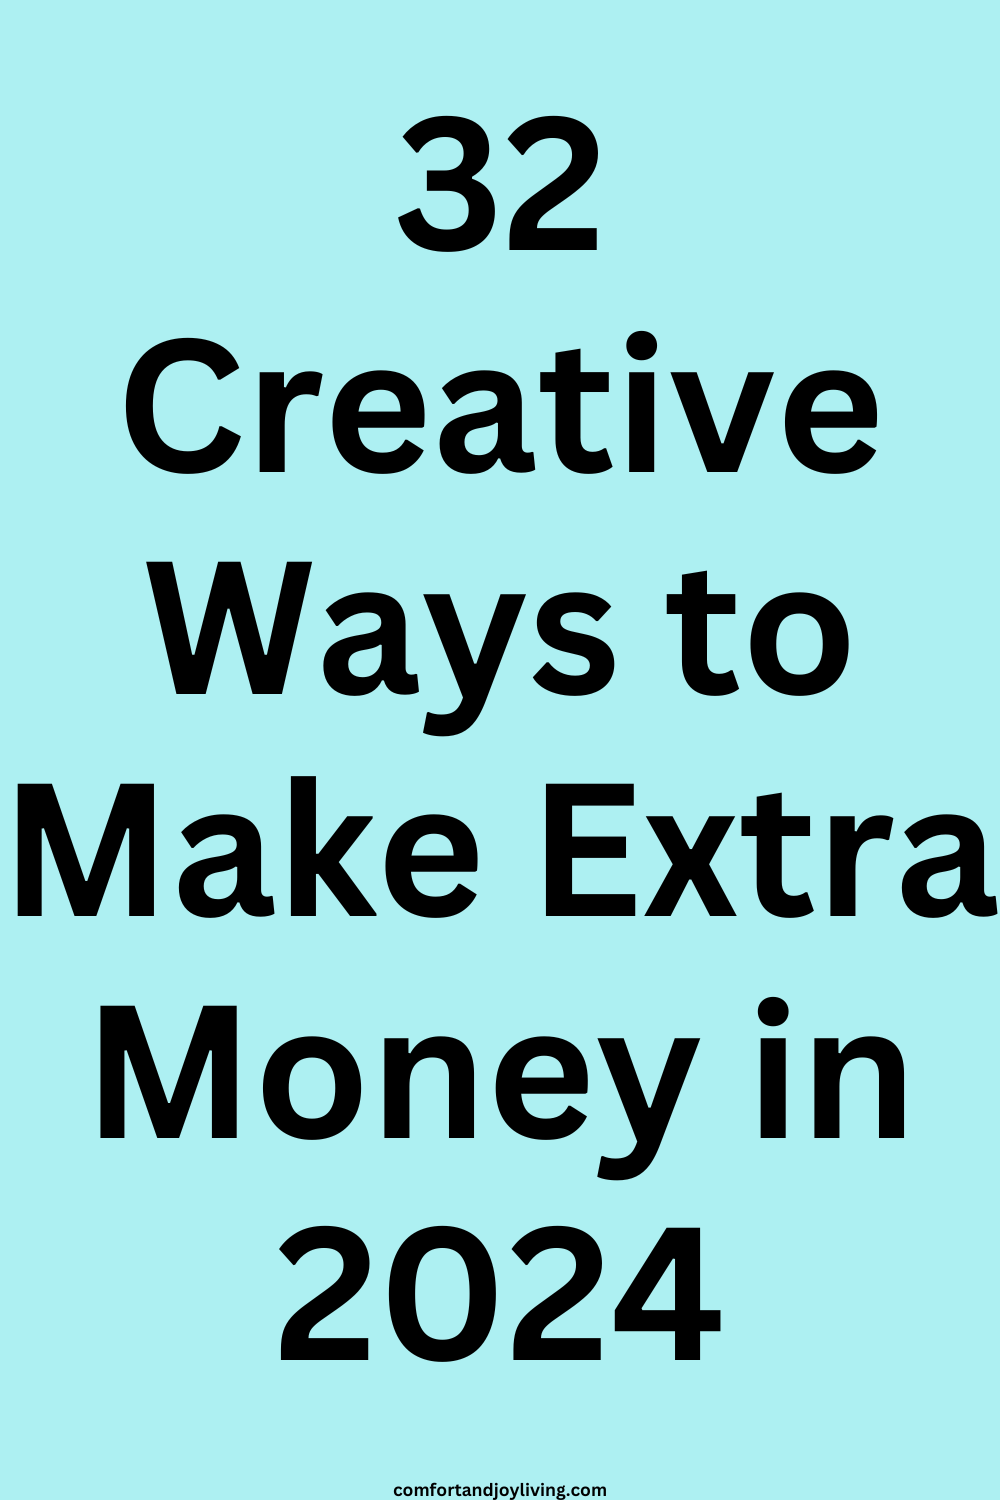 32 Creative Ways to Make Extra Money in 2024